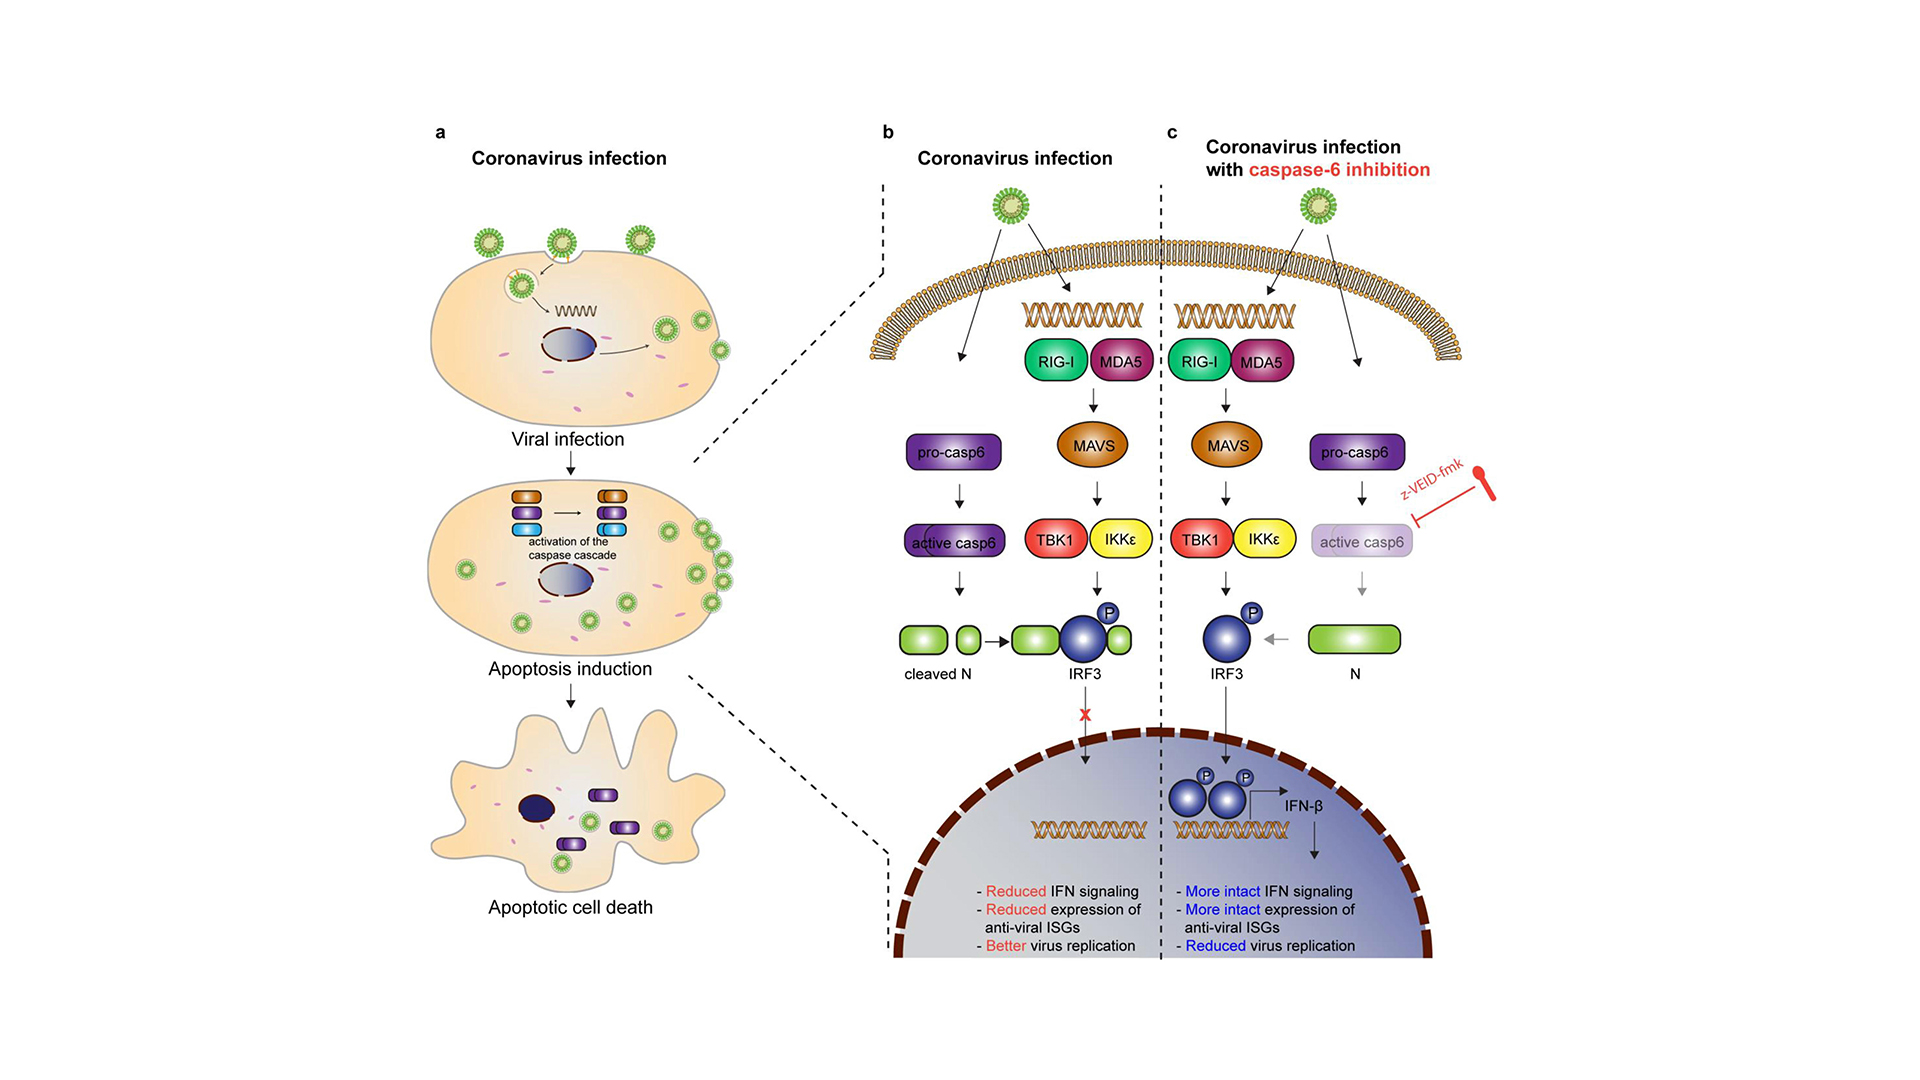 HKUMed reveals the mechanism of how coronaviruses exploit the host antiviral defence mechanisms for efficient replication